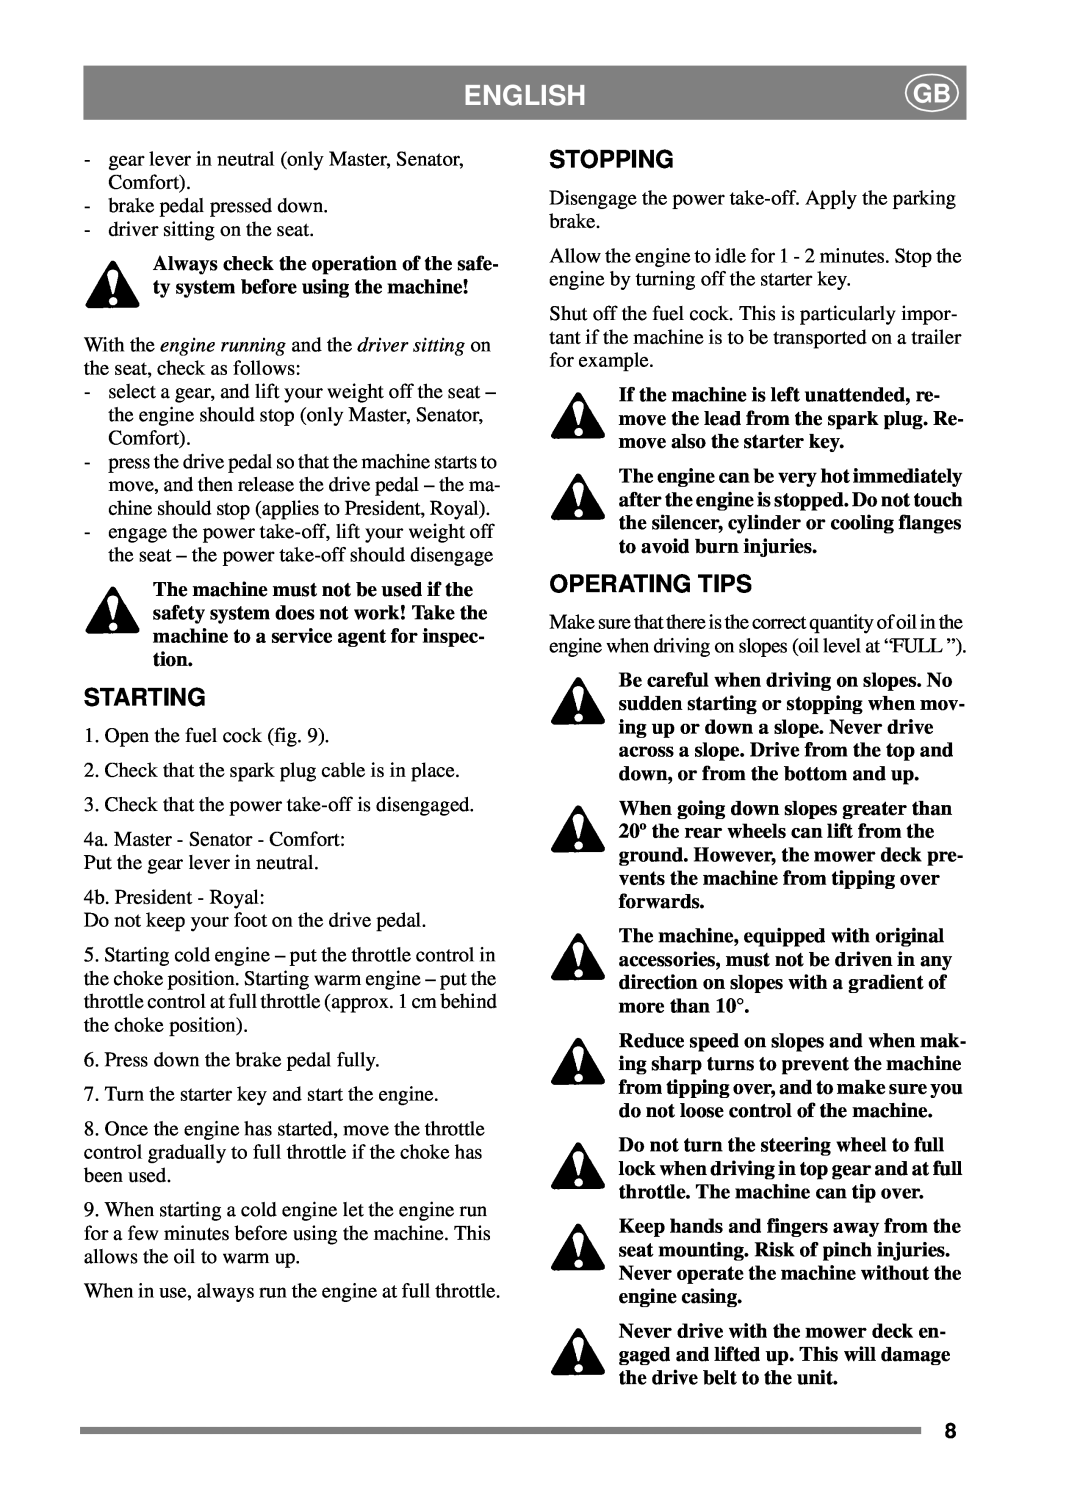 Stiga 8211-0288-01 manual Starting, Stopping, Operating Tips, English 